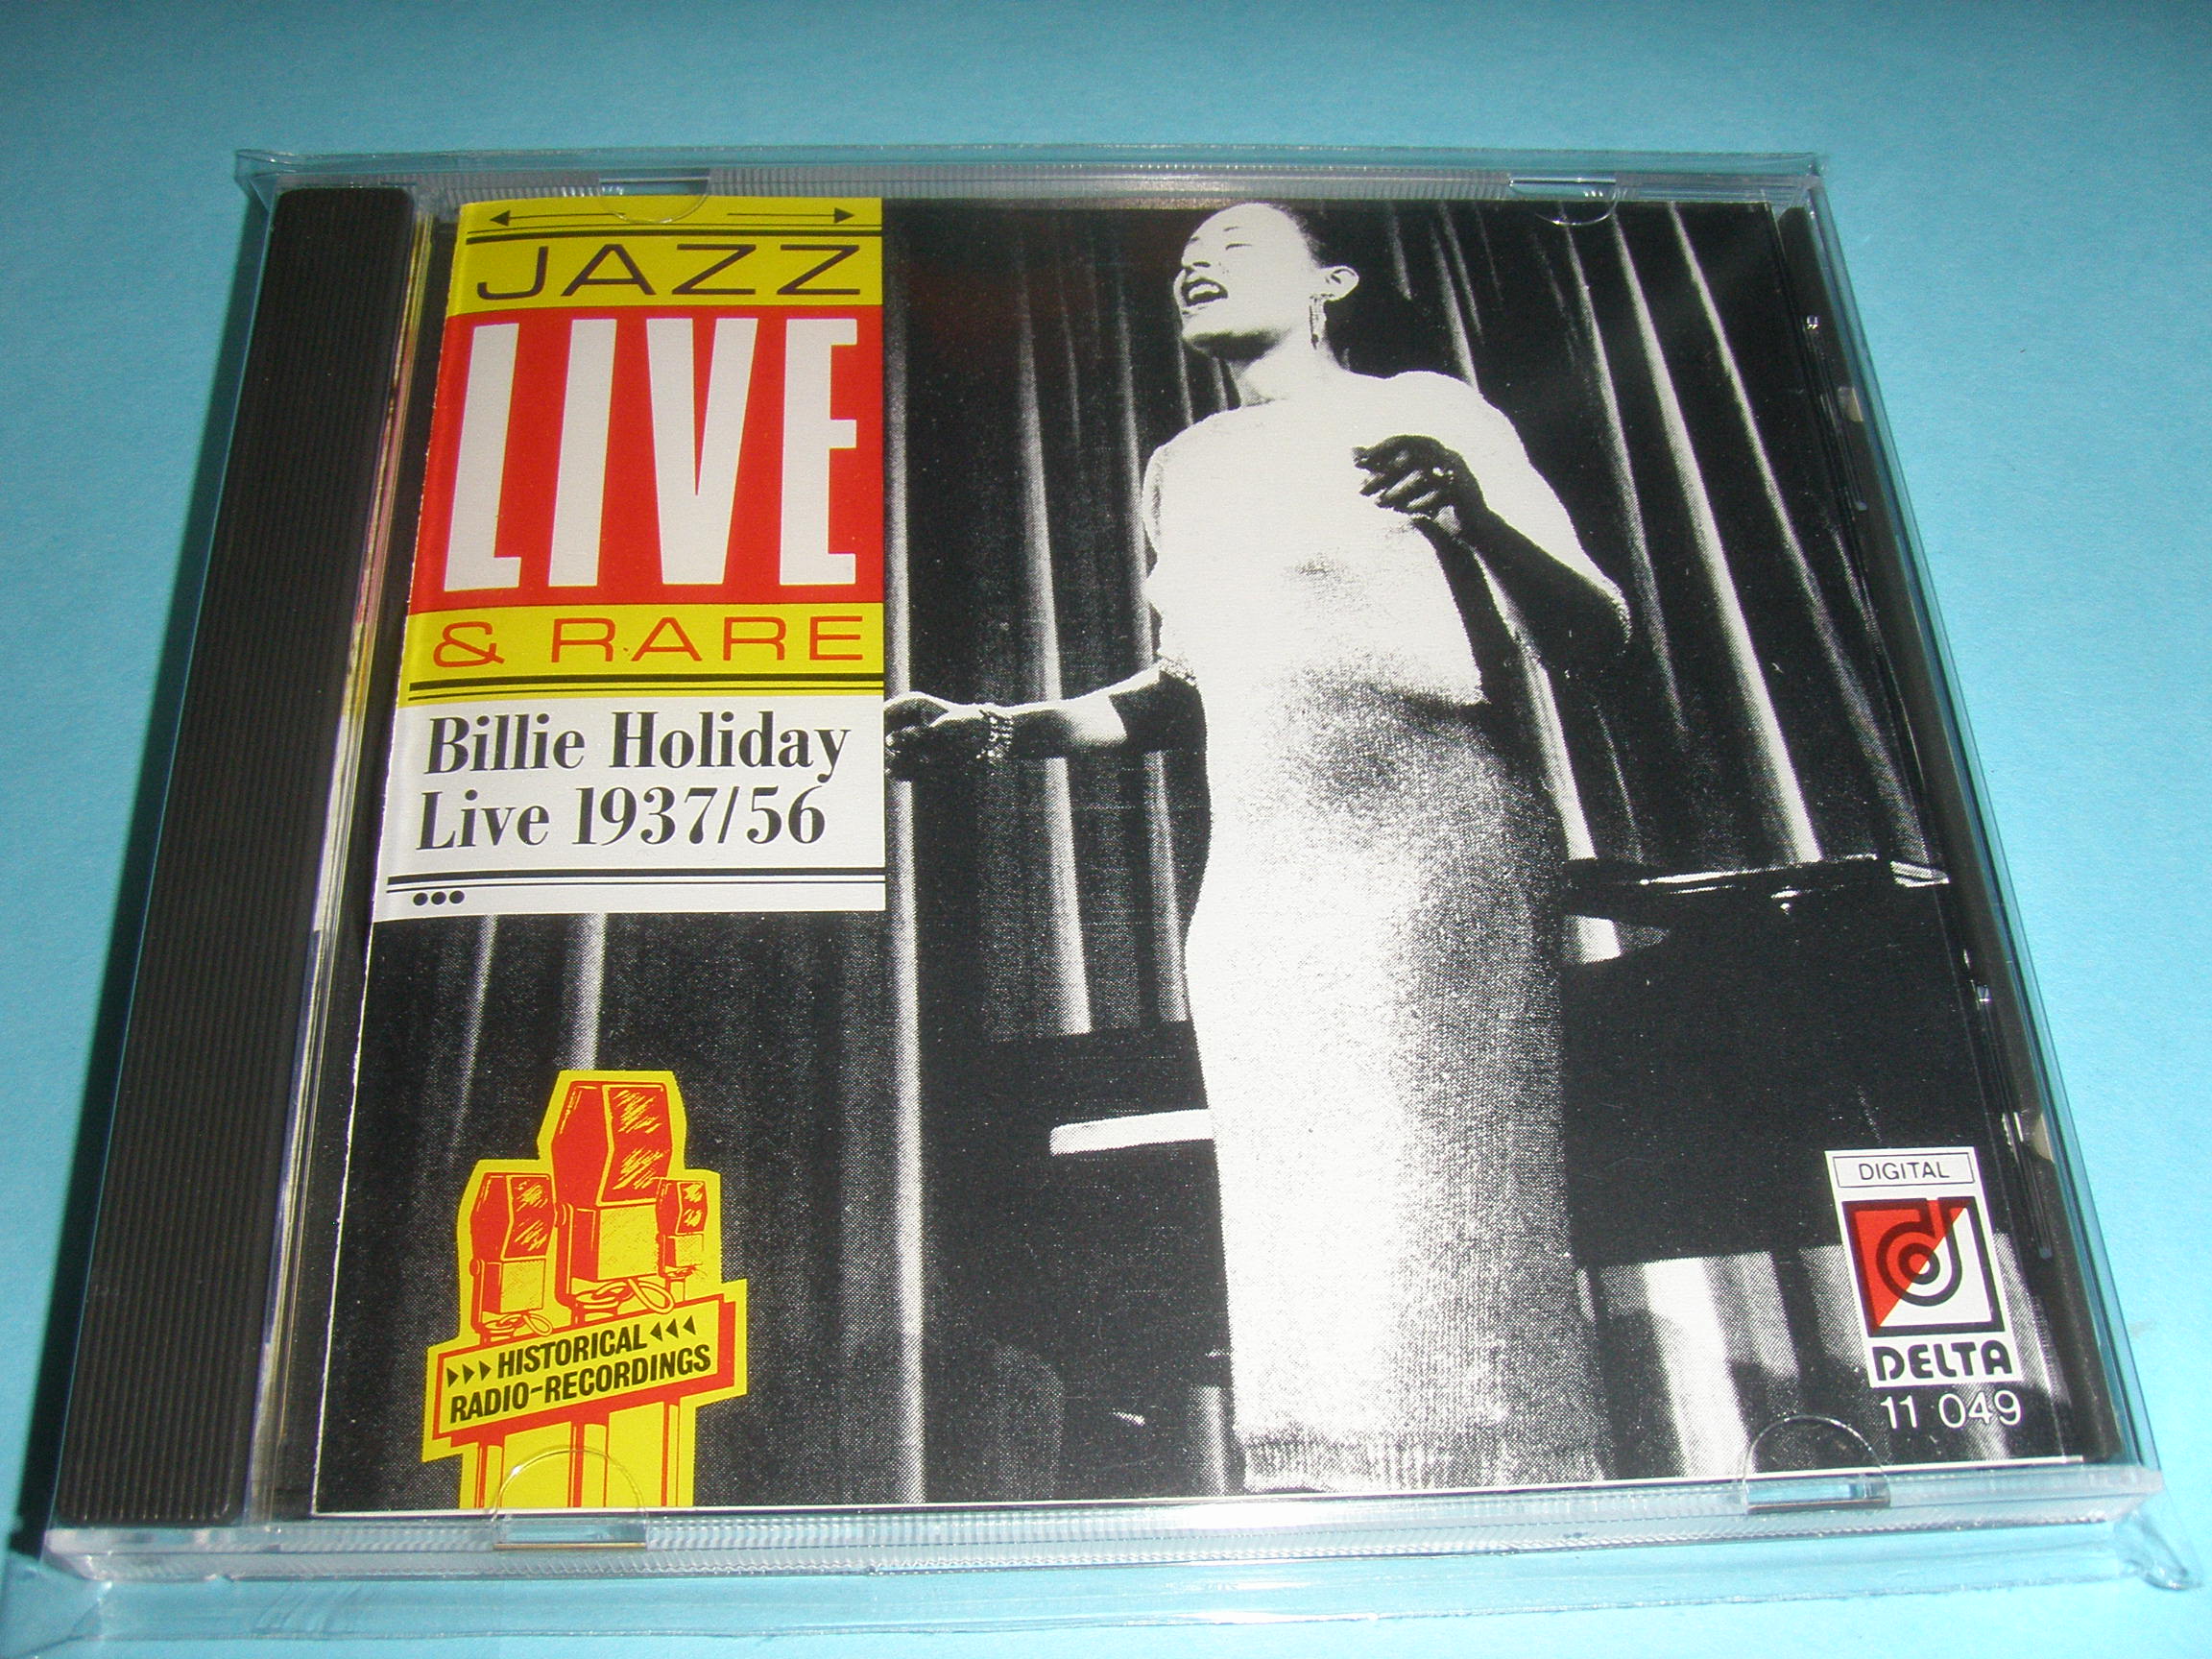 Live 1937/56